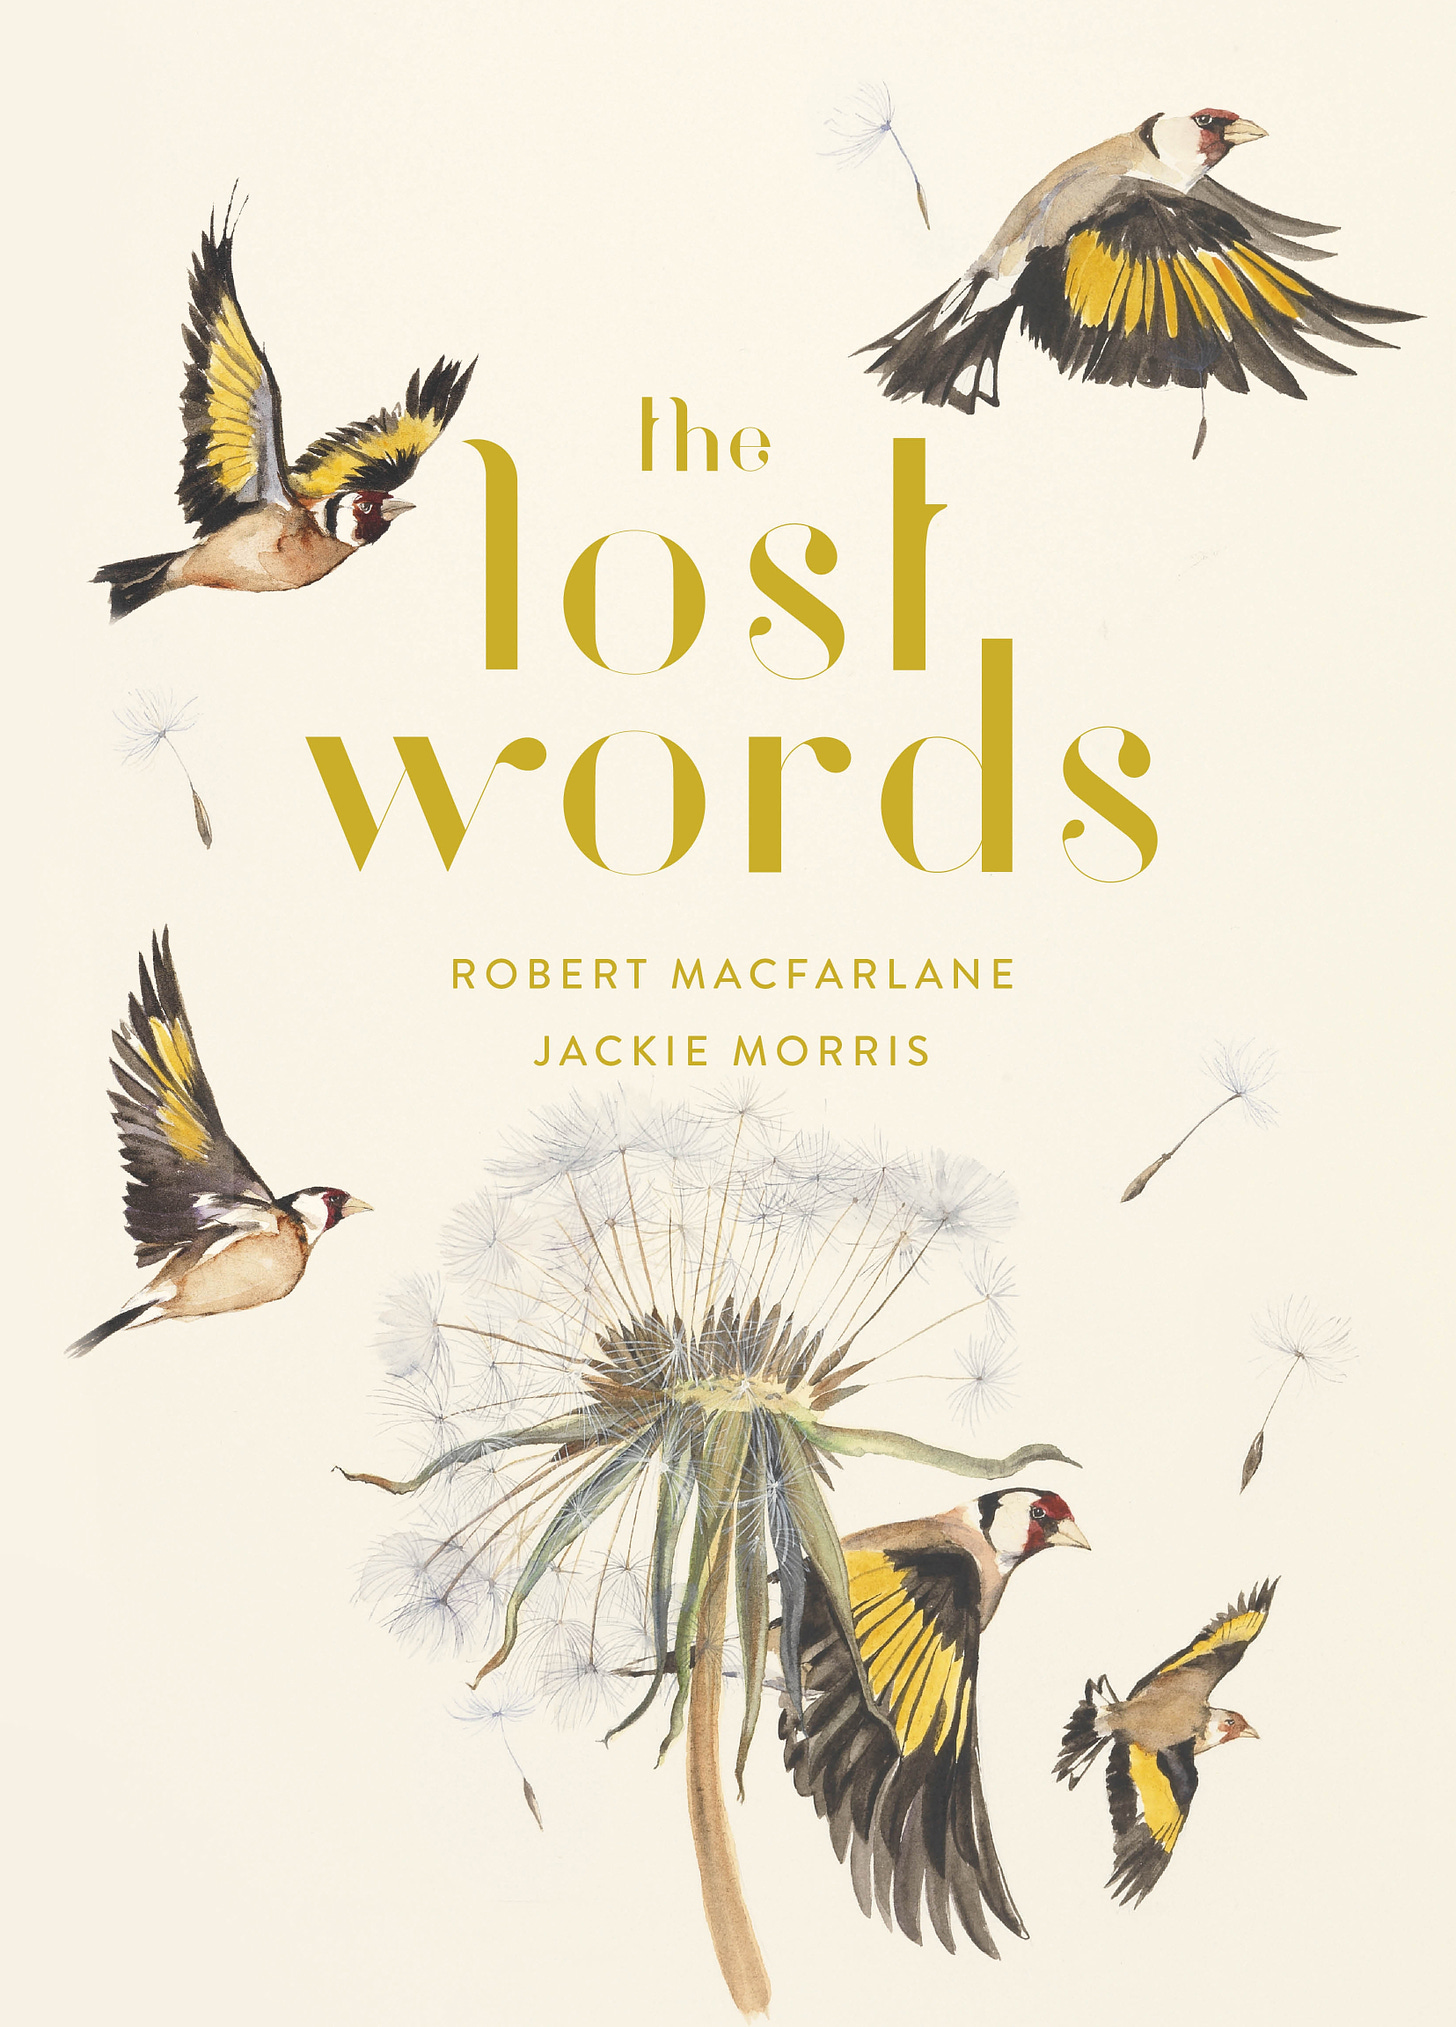 The Lost Words by Robert Macfarlane - Penguin Books Australia